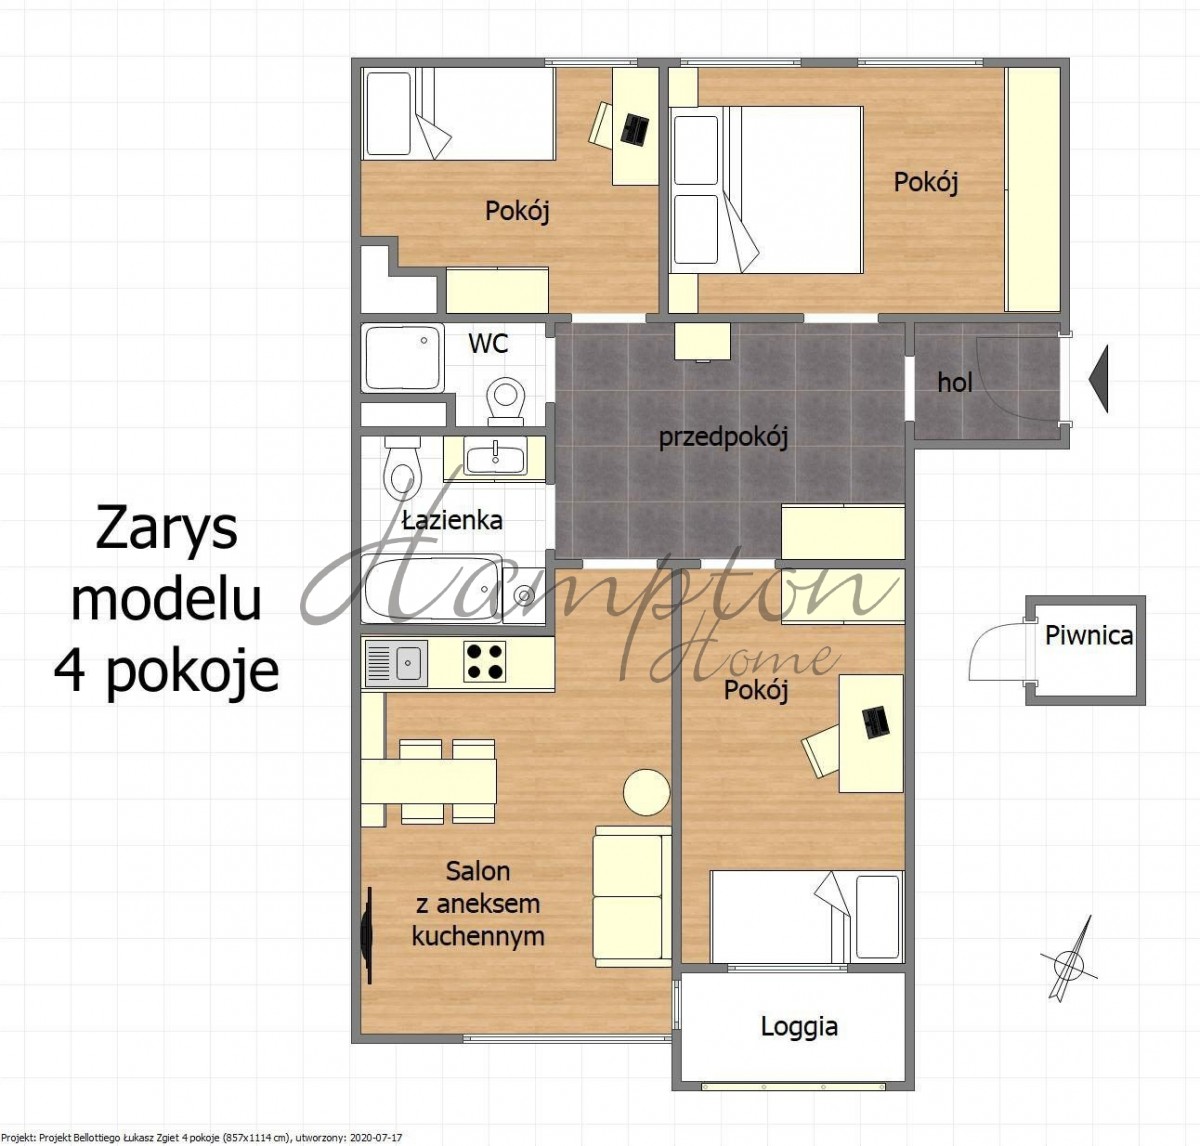 Mieszkanie, 3 pok., 64 m2, Warszawa Wola (8)